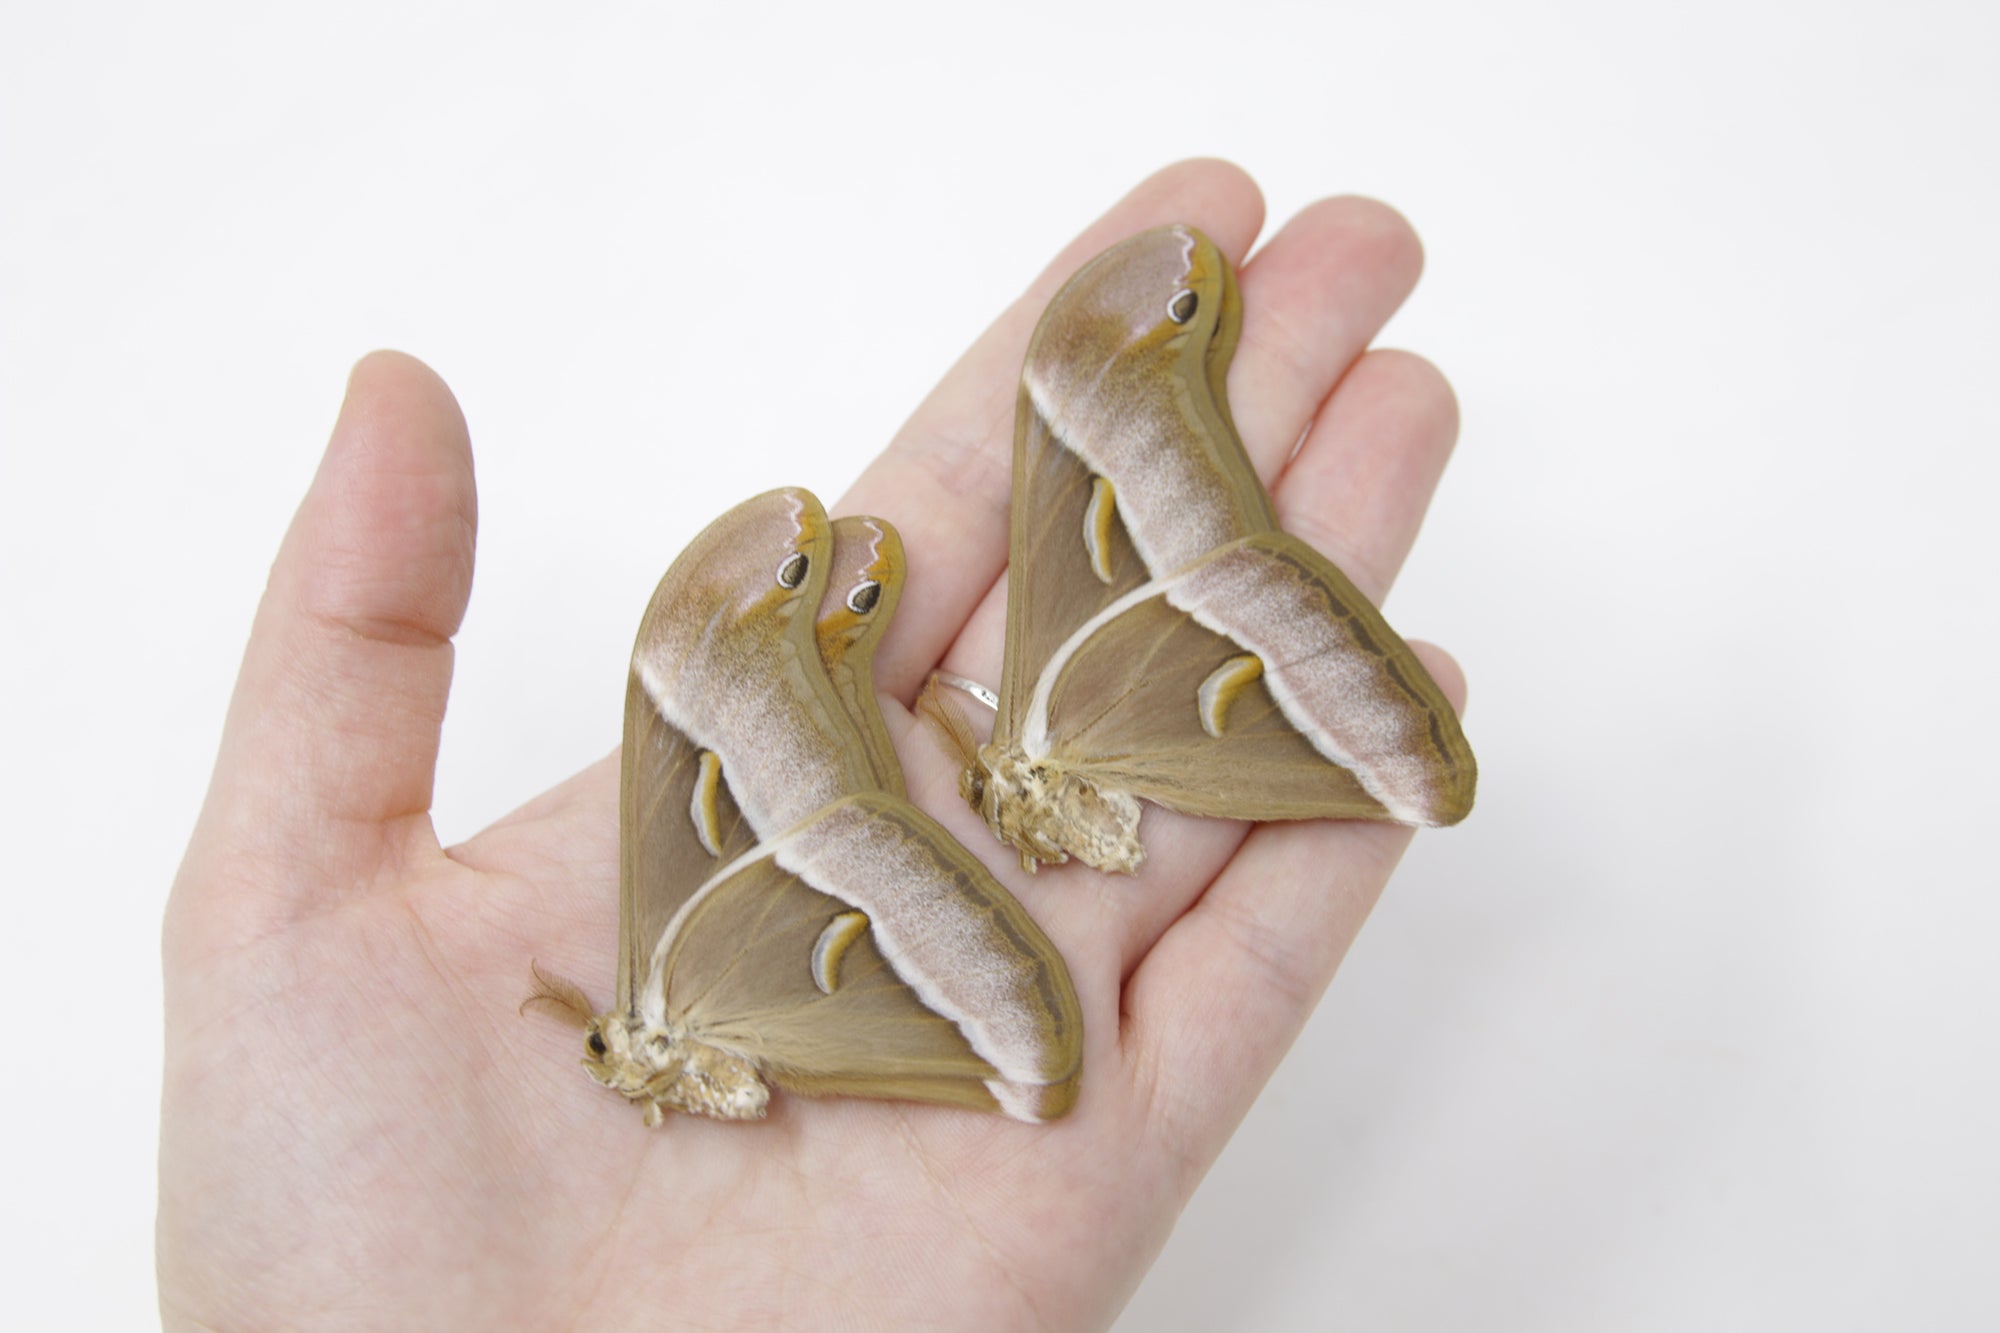 TWO (2) Samia luzonica | The Lesser Atlas Moth | Dry-preserved Lepidoptera Specimens